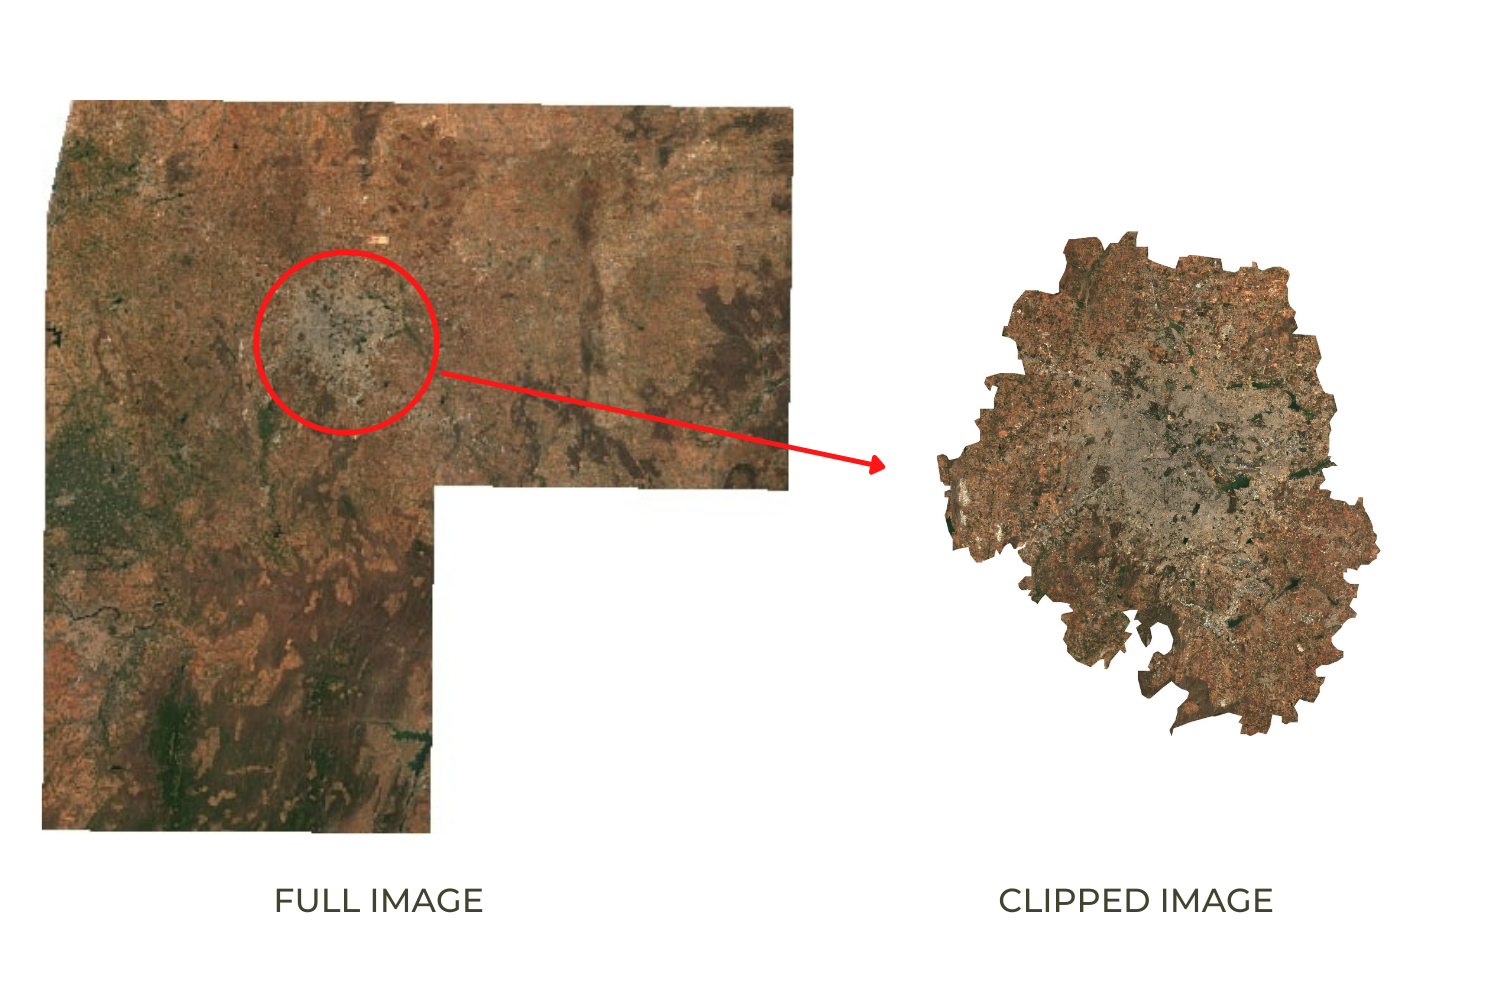 Full Image vs. Clipped Image